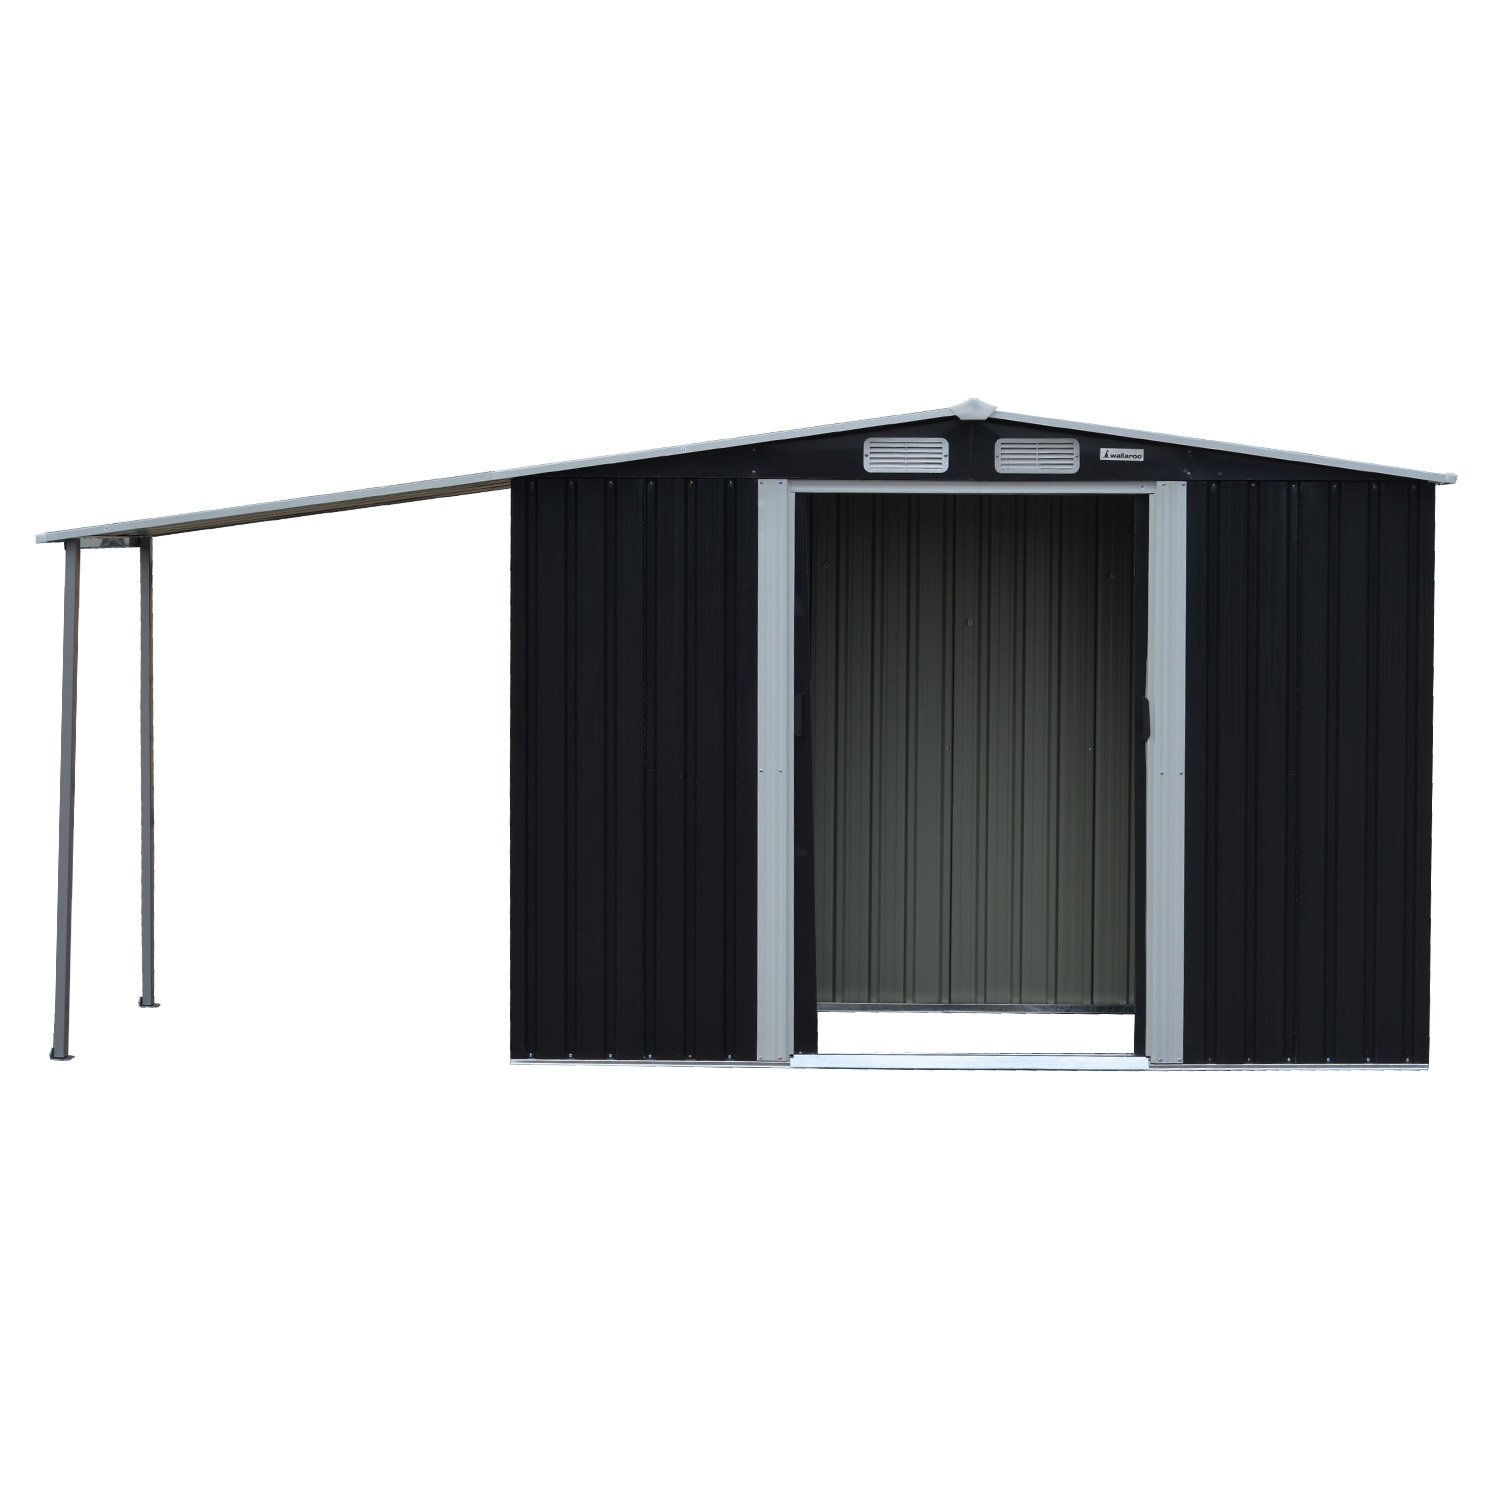 Wallaroo 4x8ft Zinc Steel Garden Shed with Open Storage - Black 1